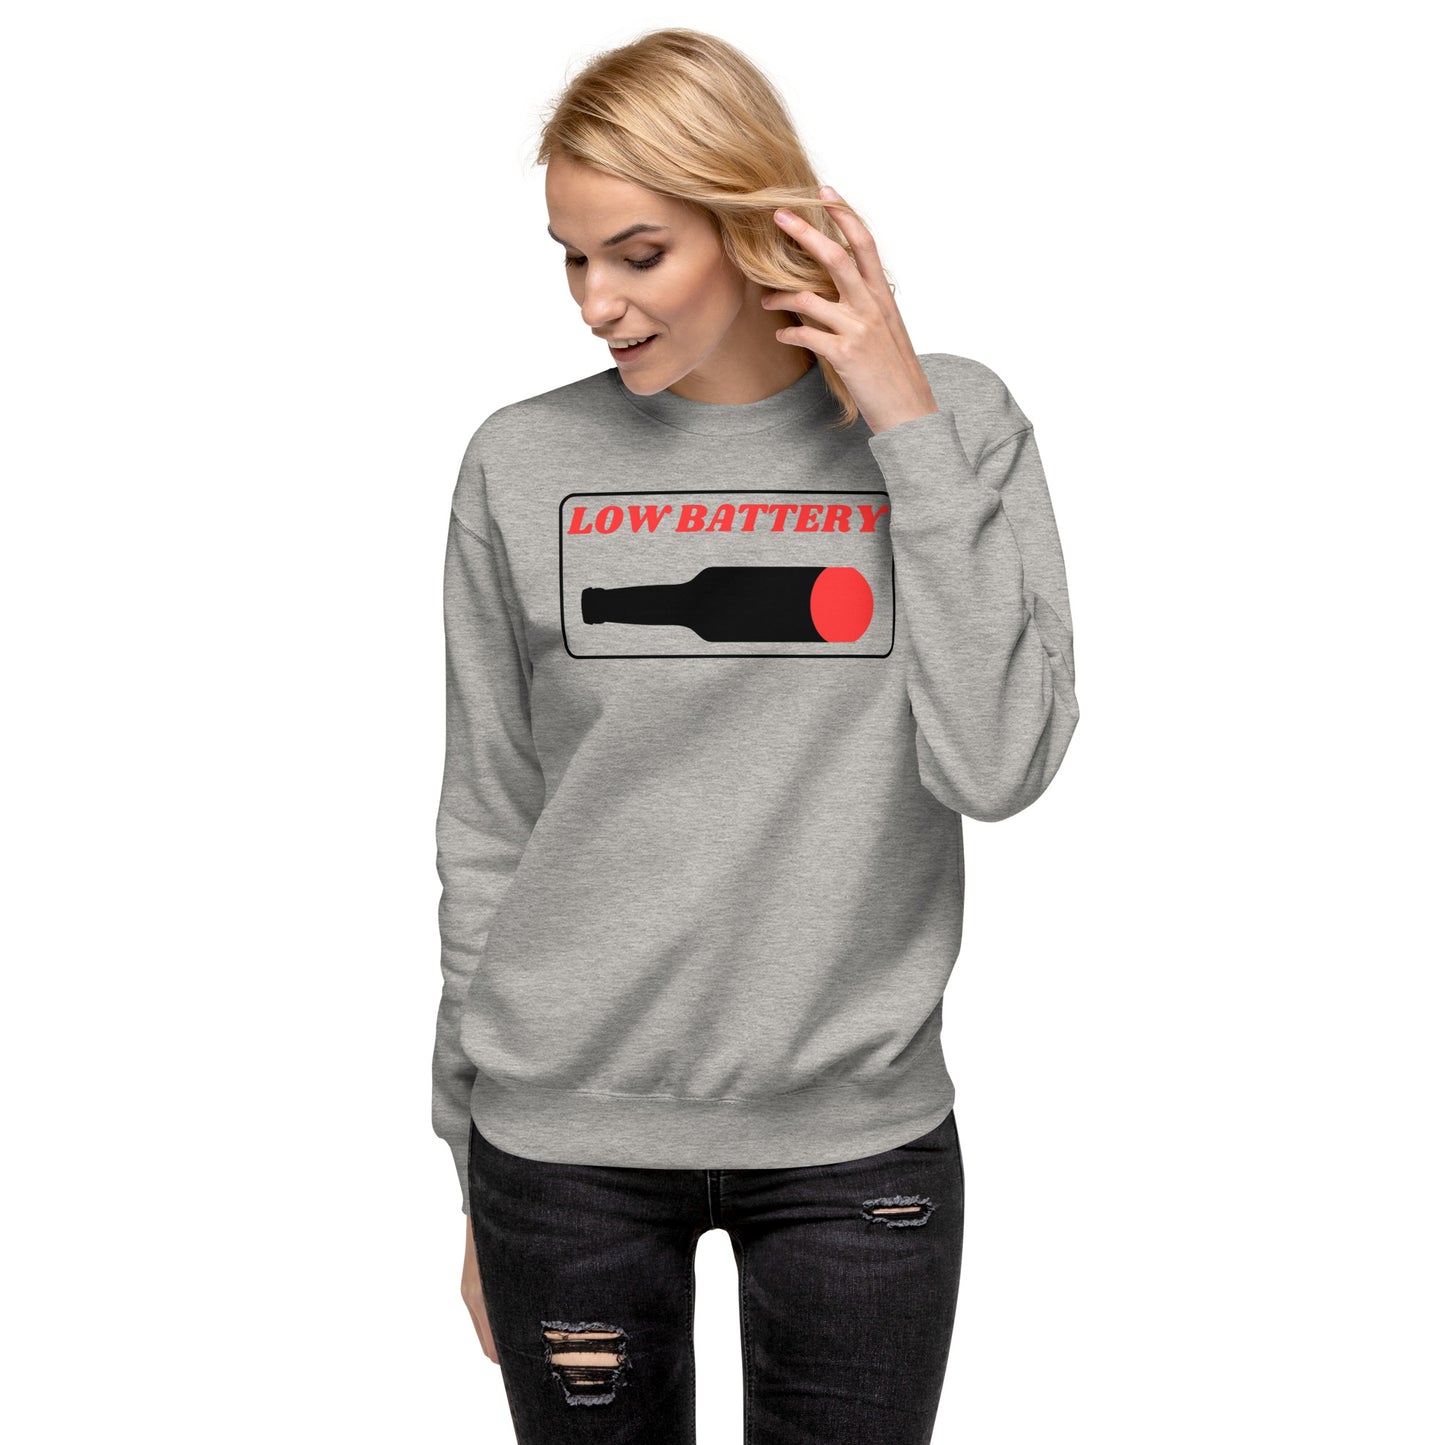 Low Battery Premium Sweatshirt - Light